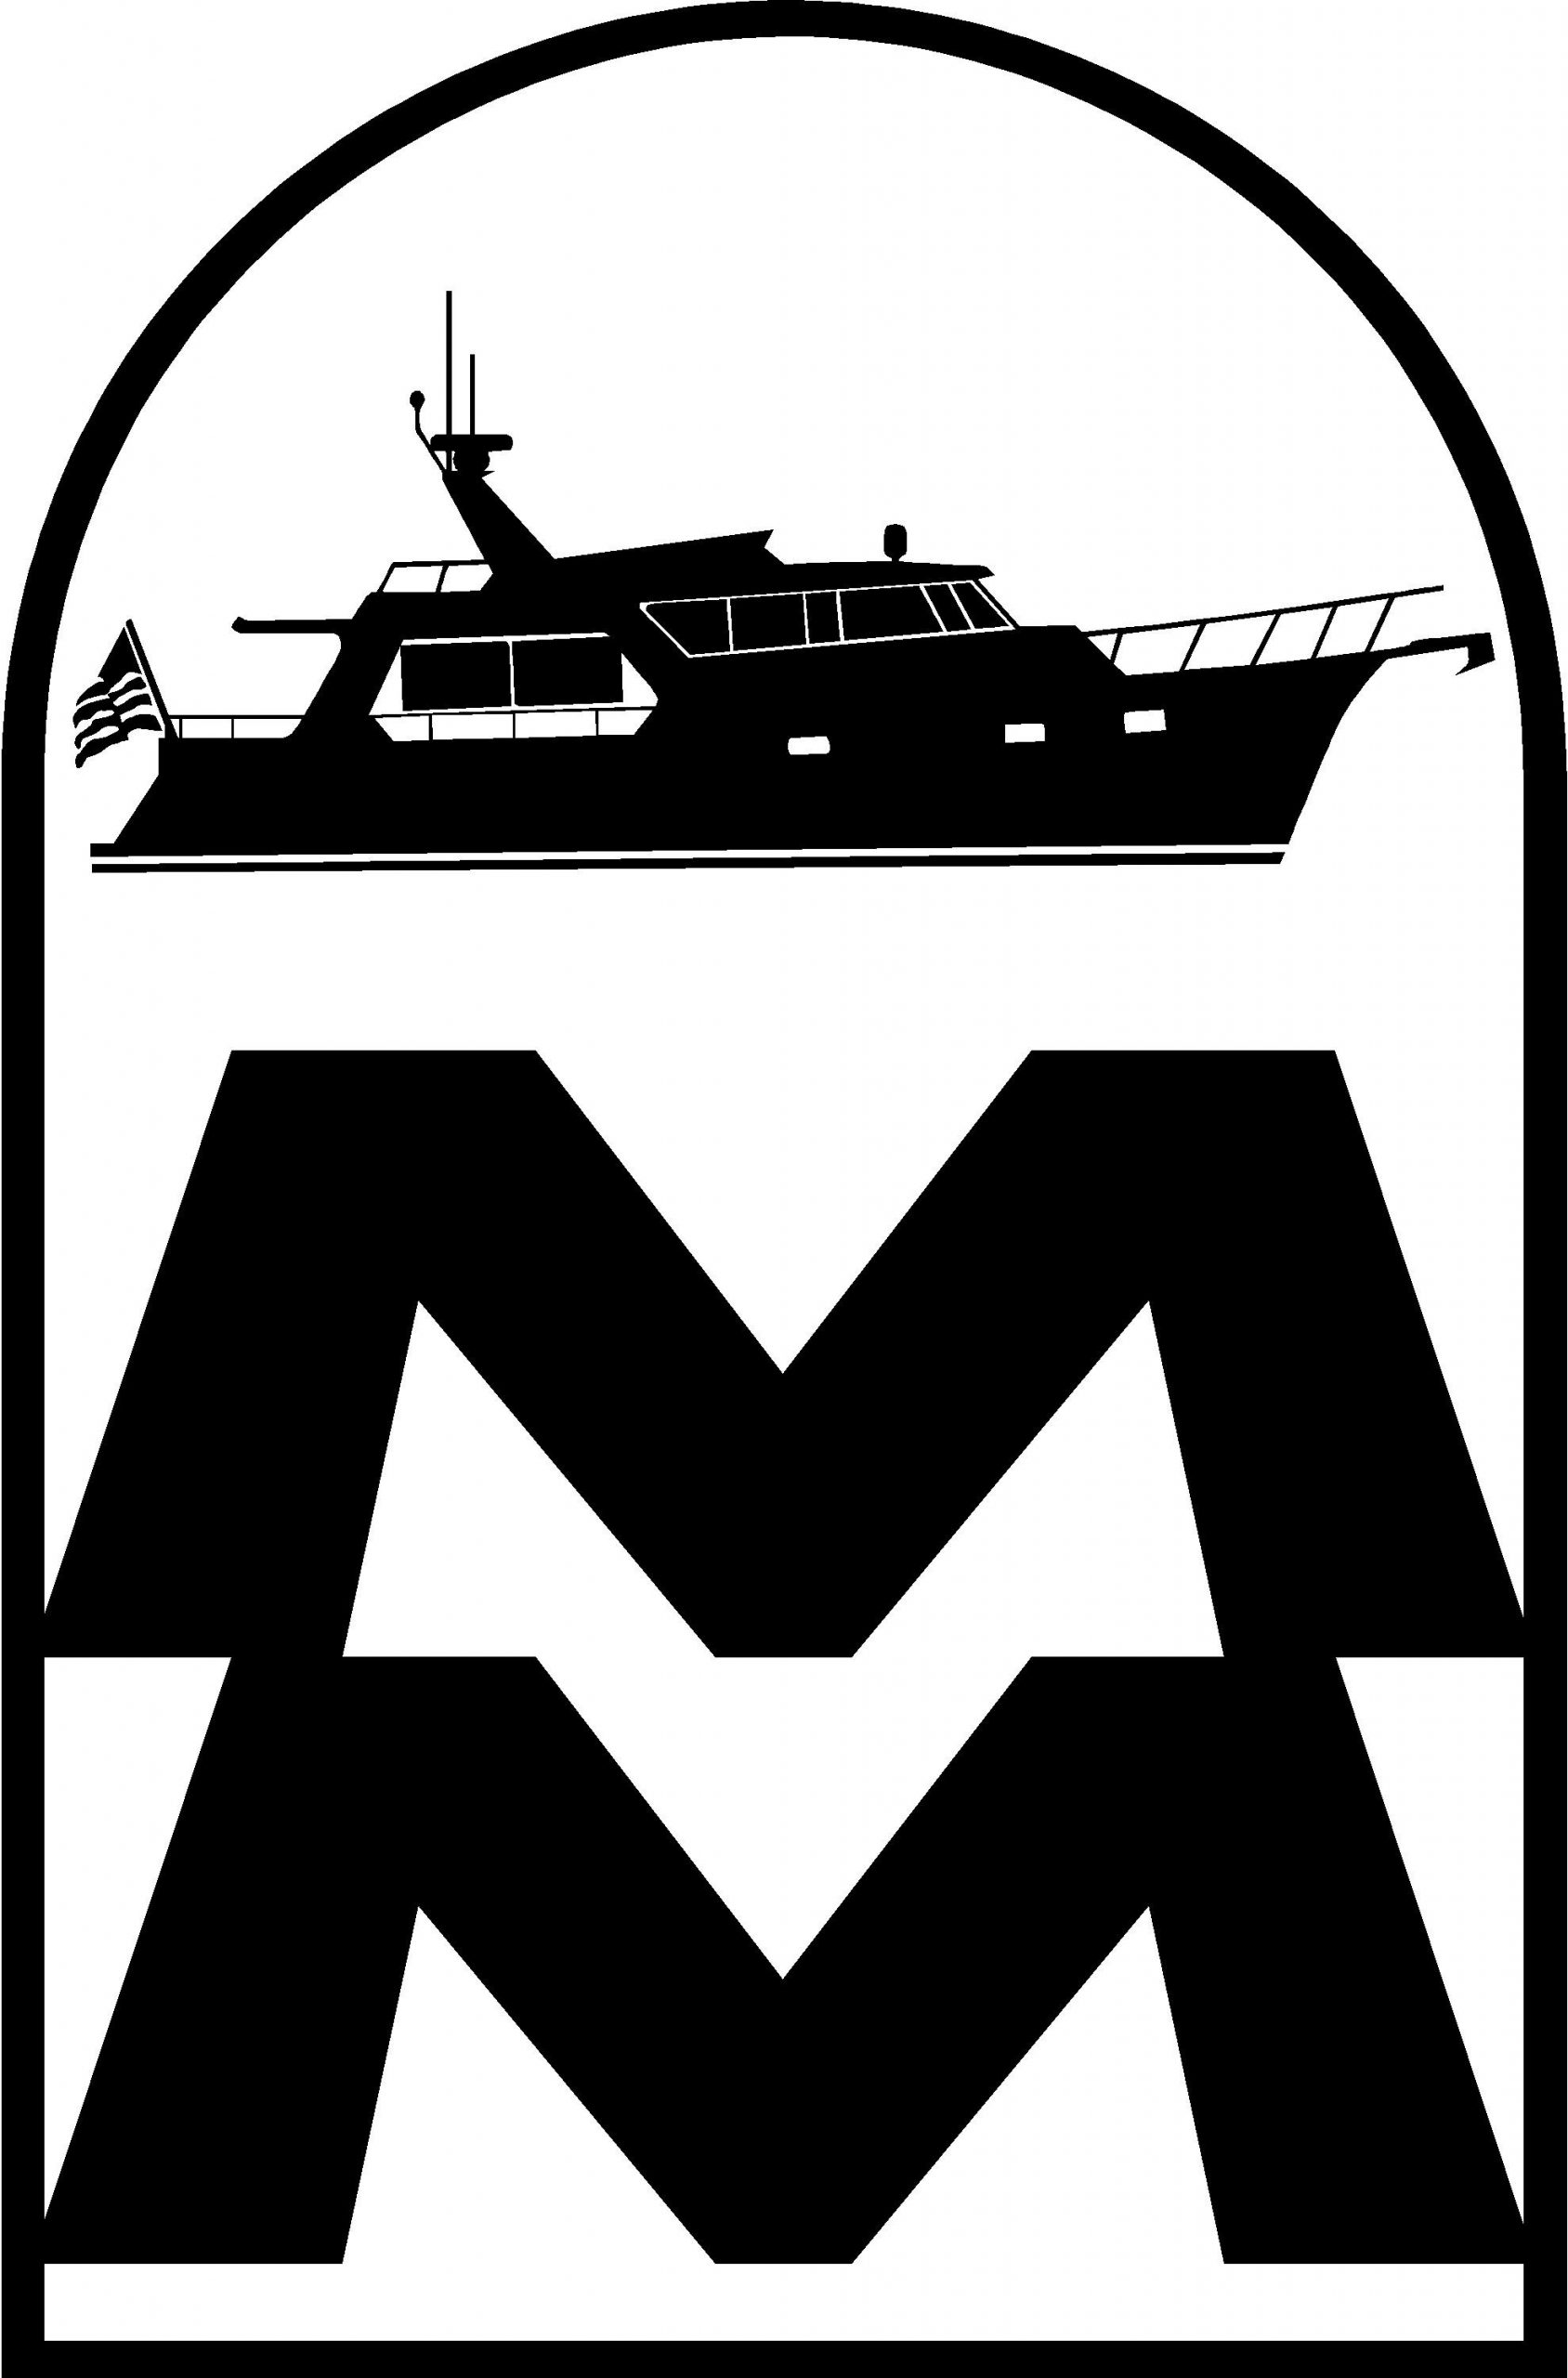 Marlow Marine (2)